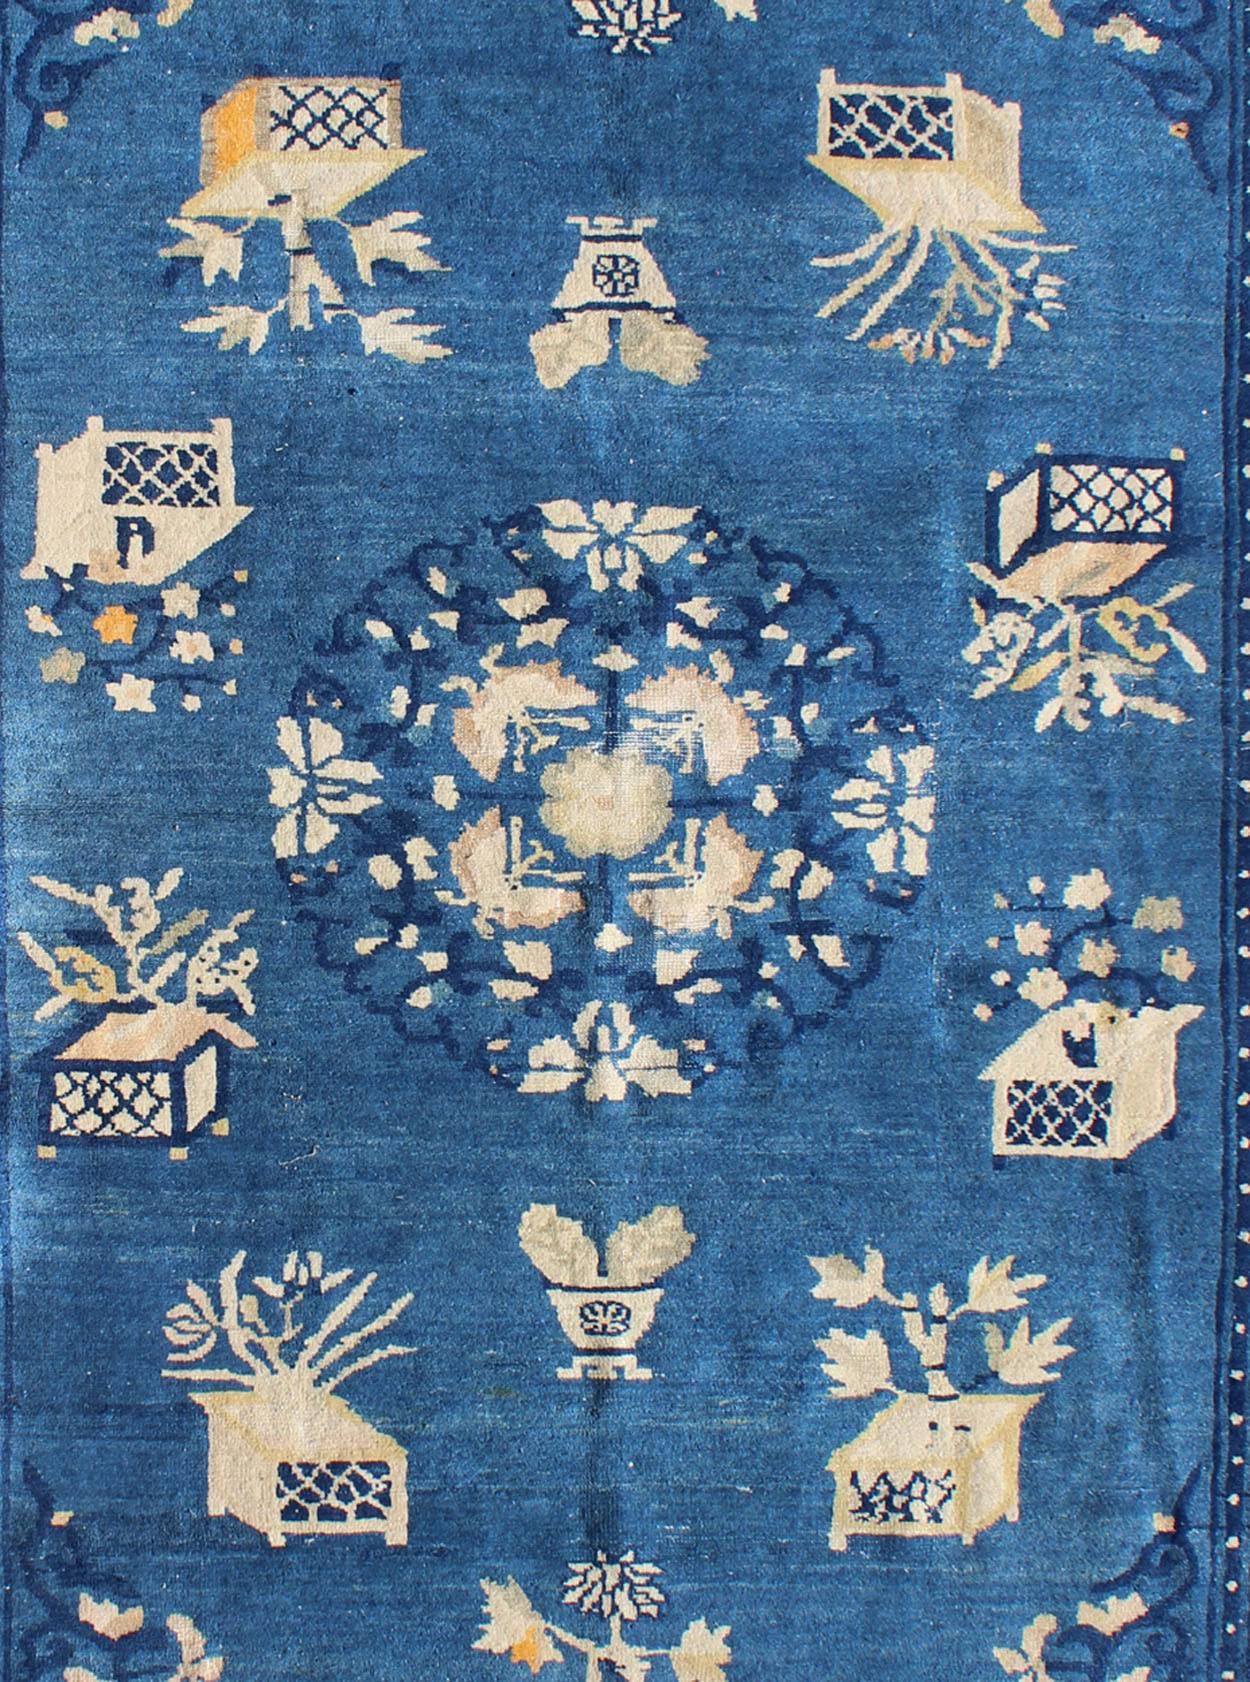 chinese rug patterns